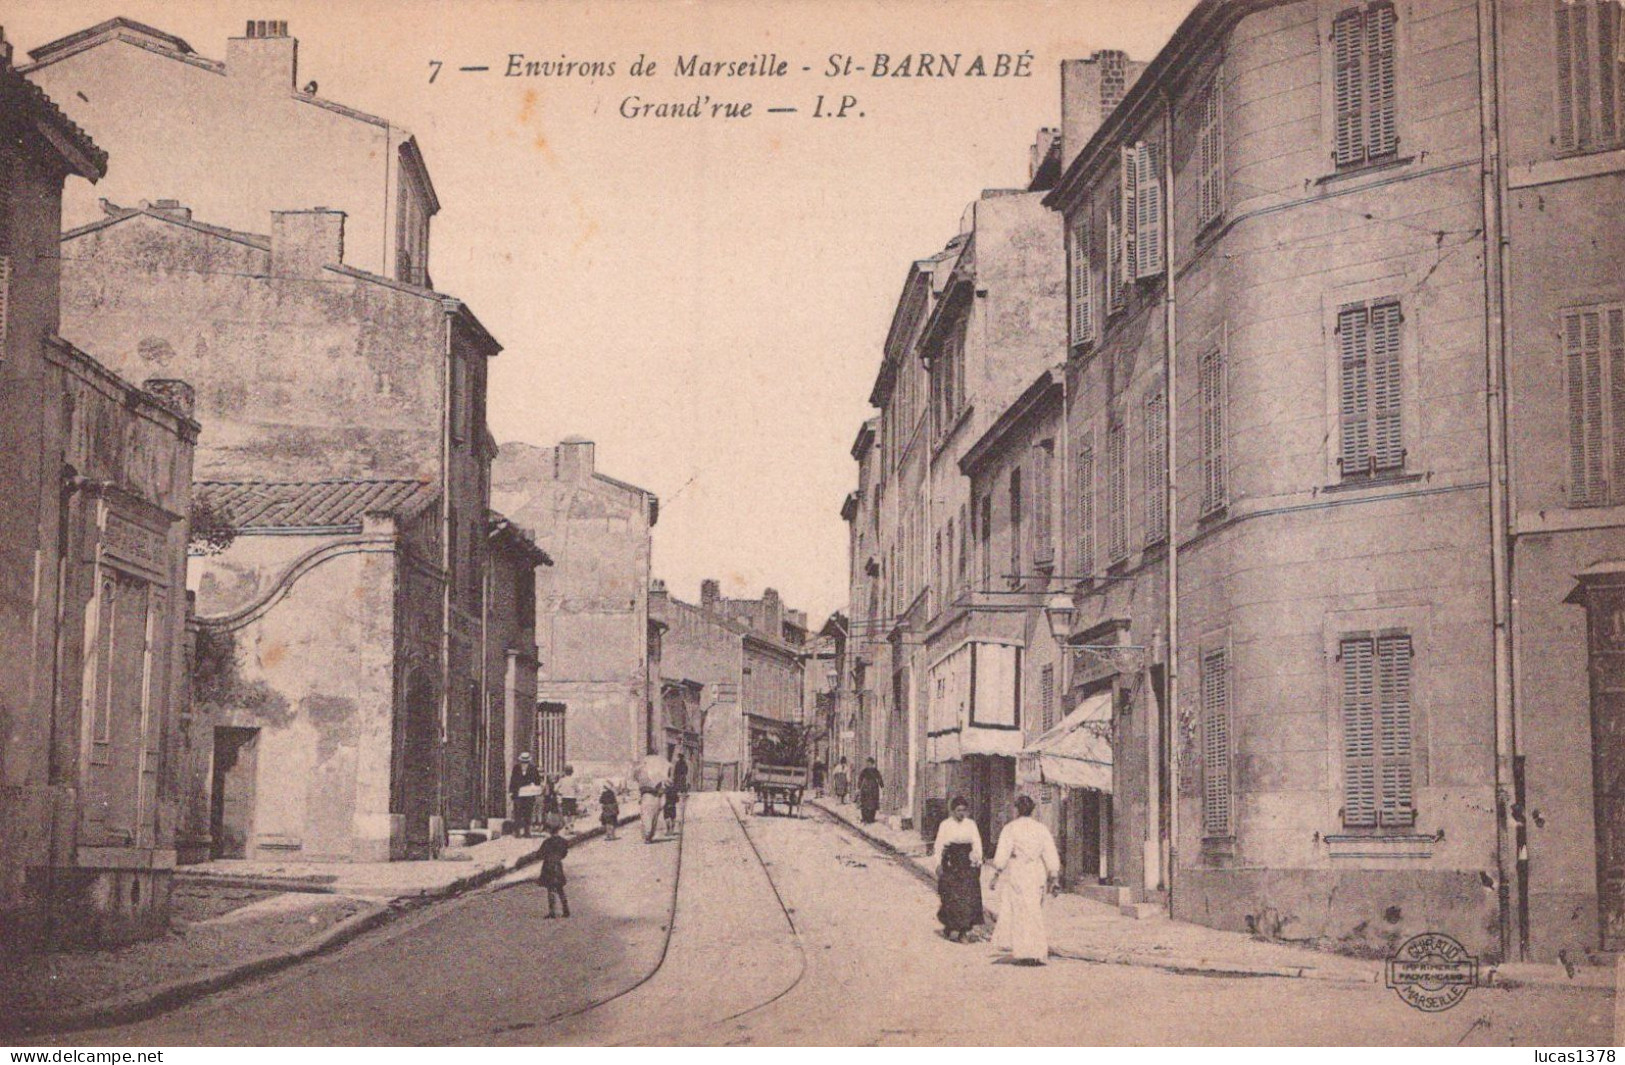 13 / MARSEILLE / SAINT BARNABE / GRAND RUE / IP 7 - Saint Barnabé, Saint Julien, Montolivet